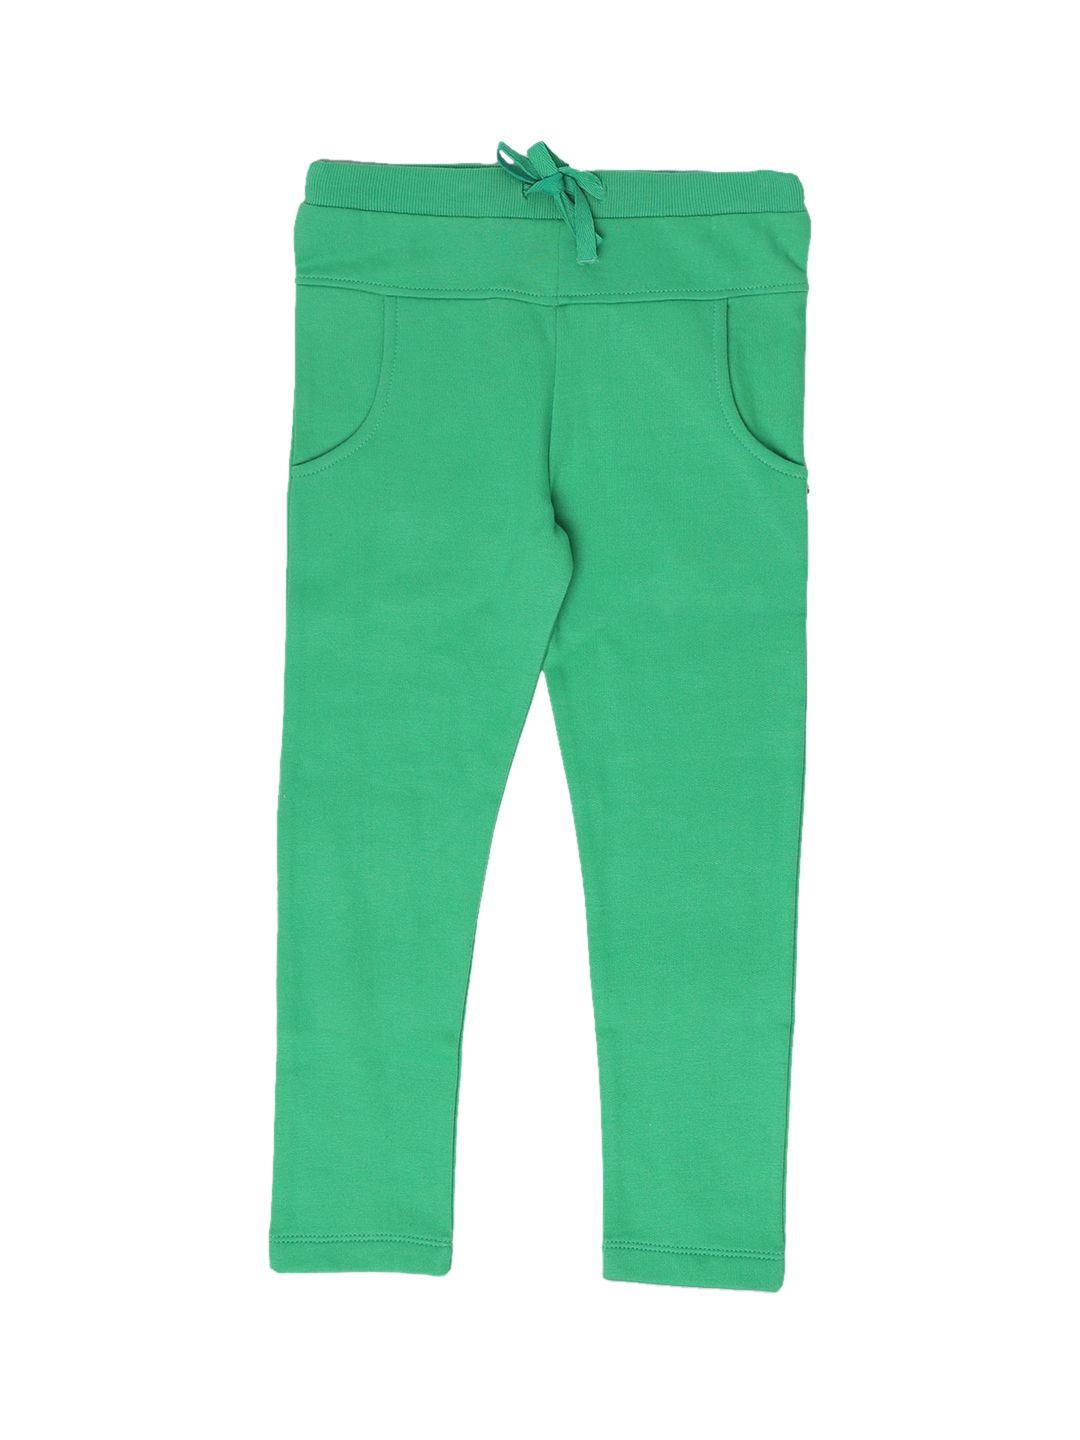 Nino Bambino Boys Green Solid Cotton Track Pant